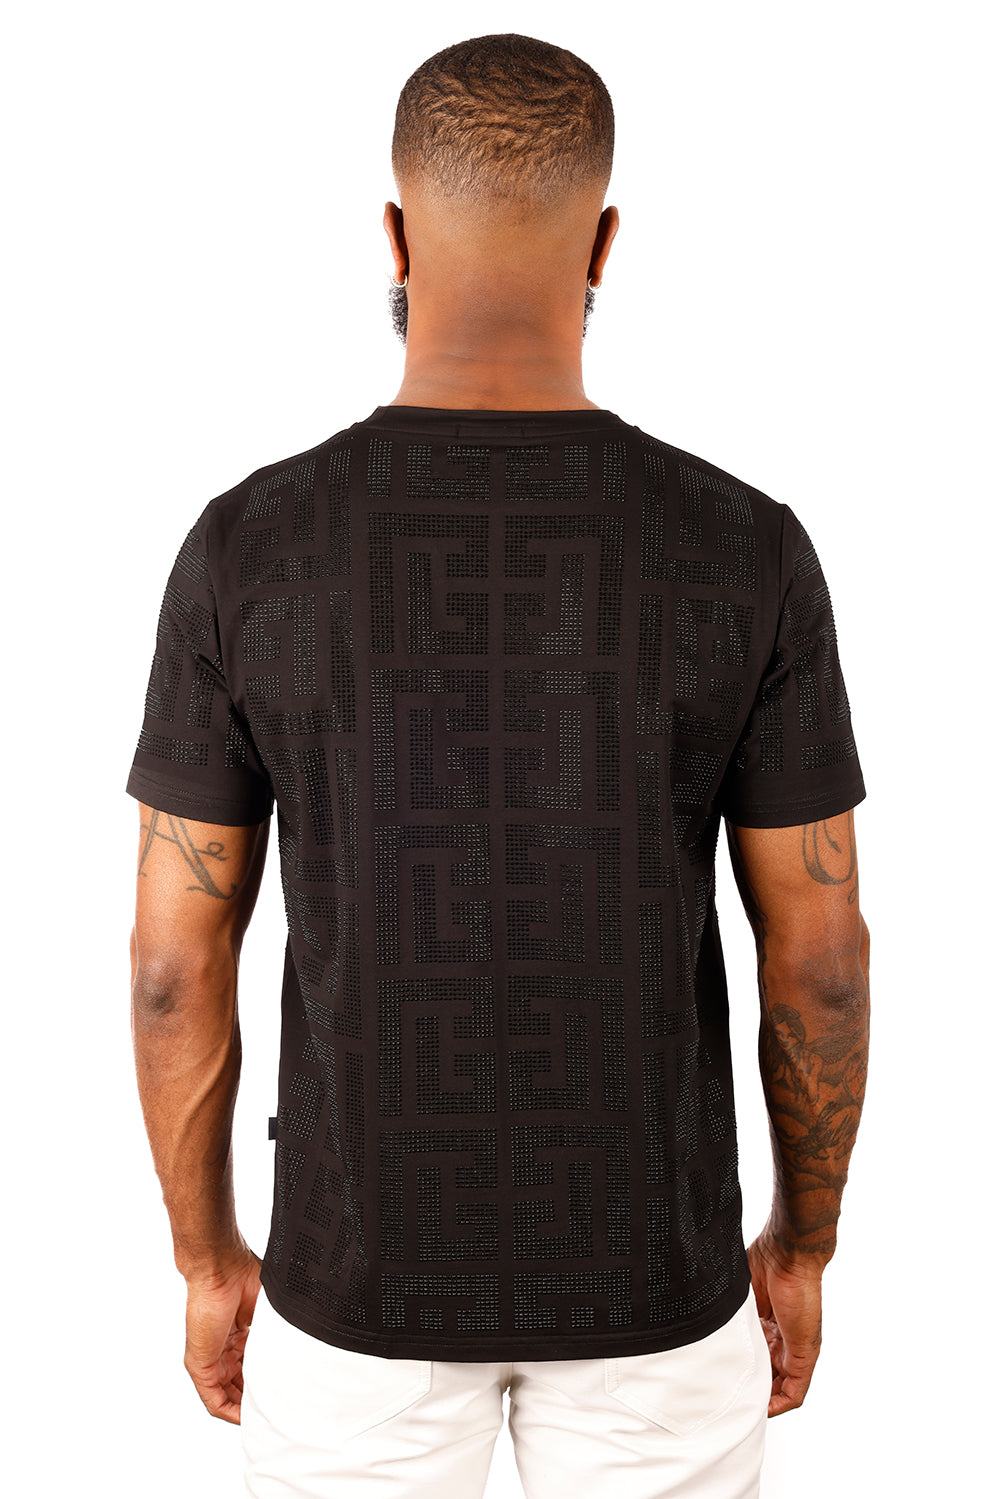 BARABAS Men's Greek Key Pattern Crew Neck T-Shirt 2STR7 Black